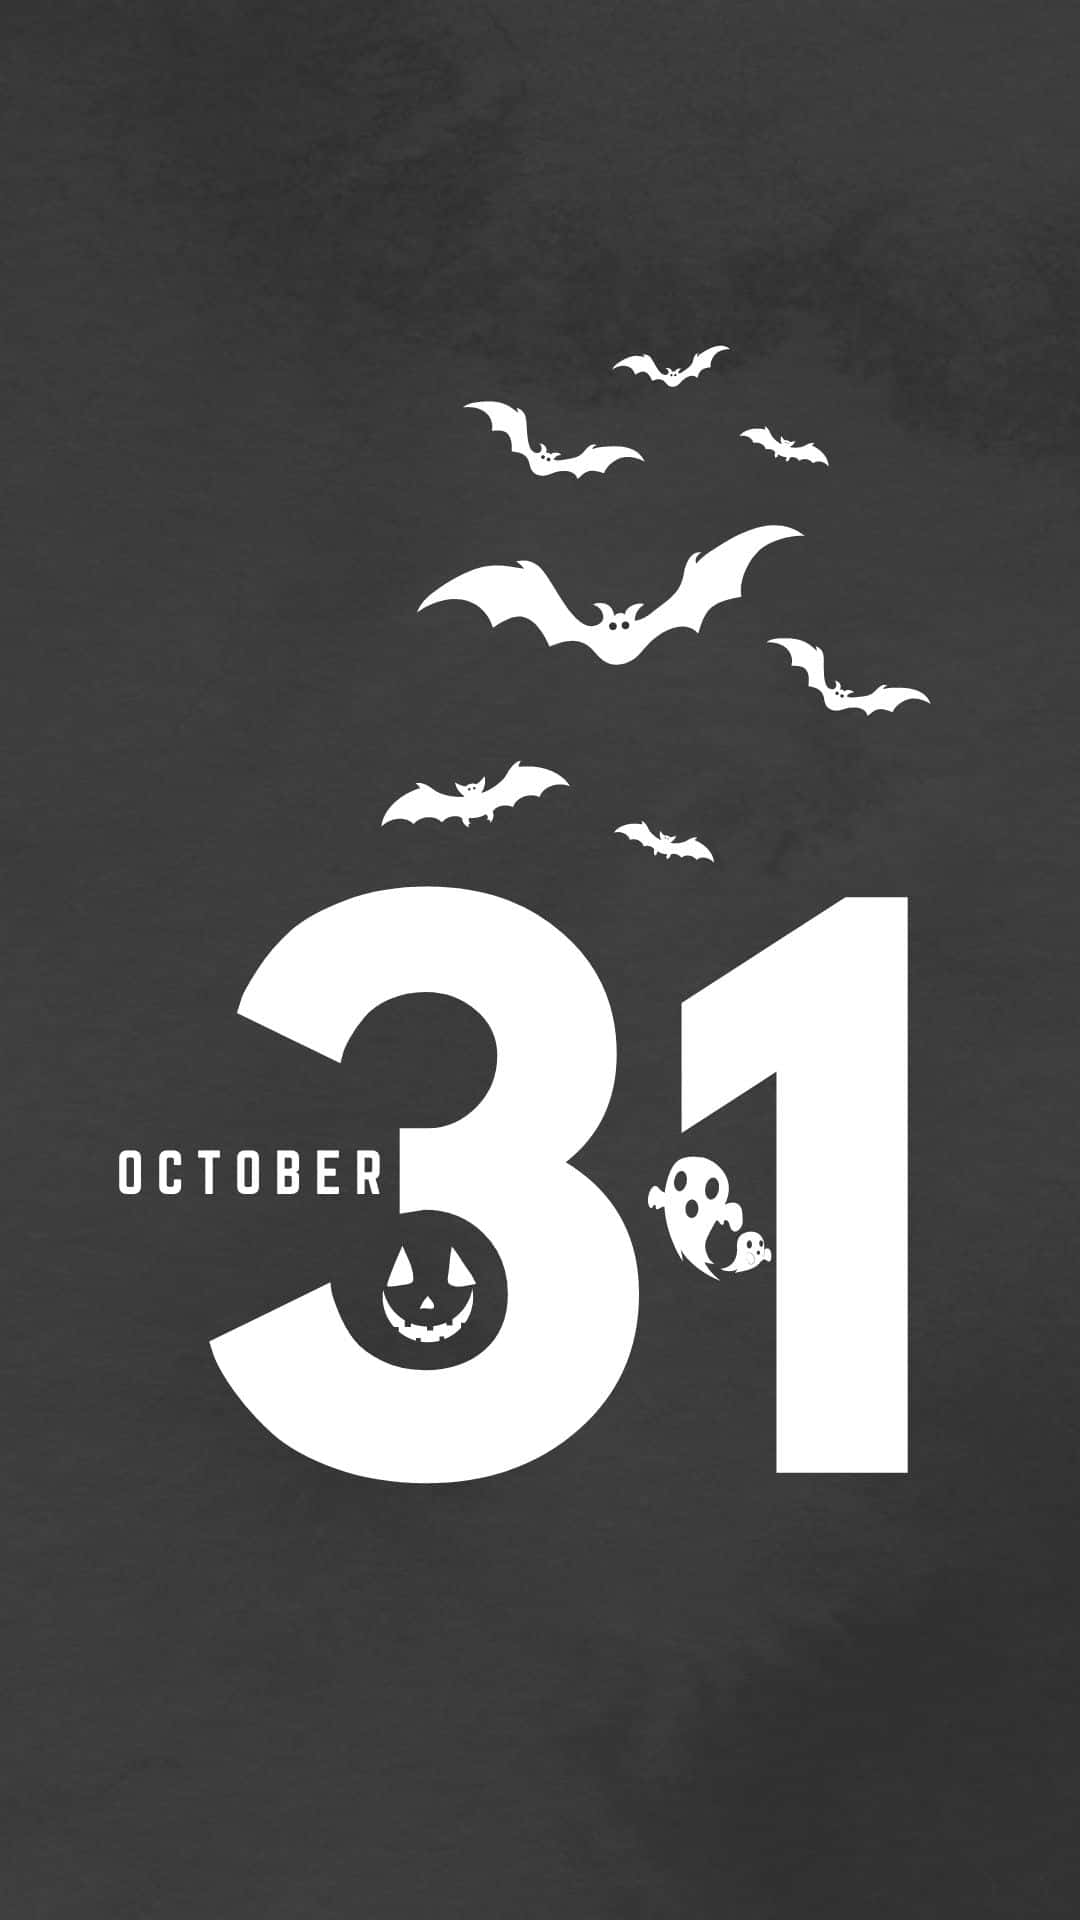 Get spooky on October 31st! Wallpaper